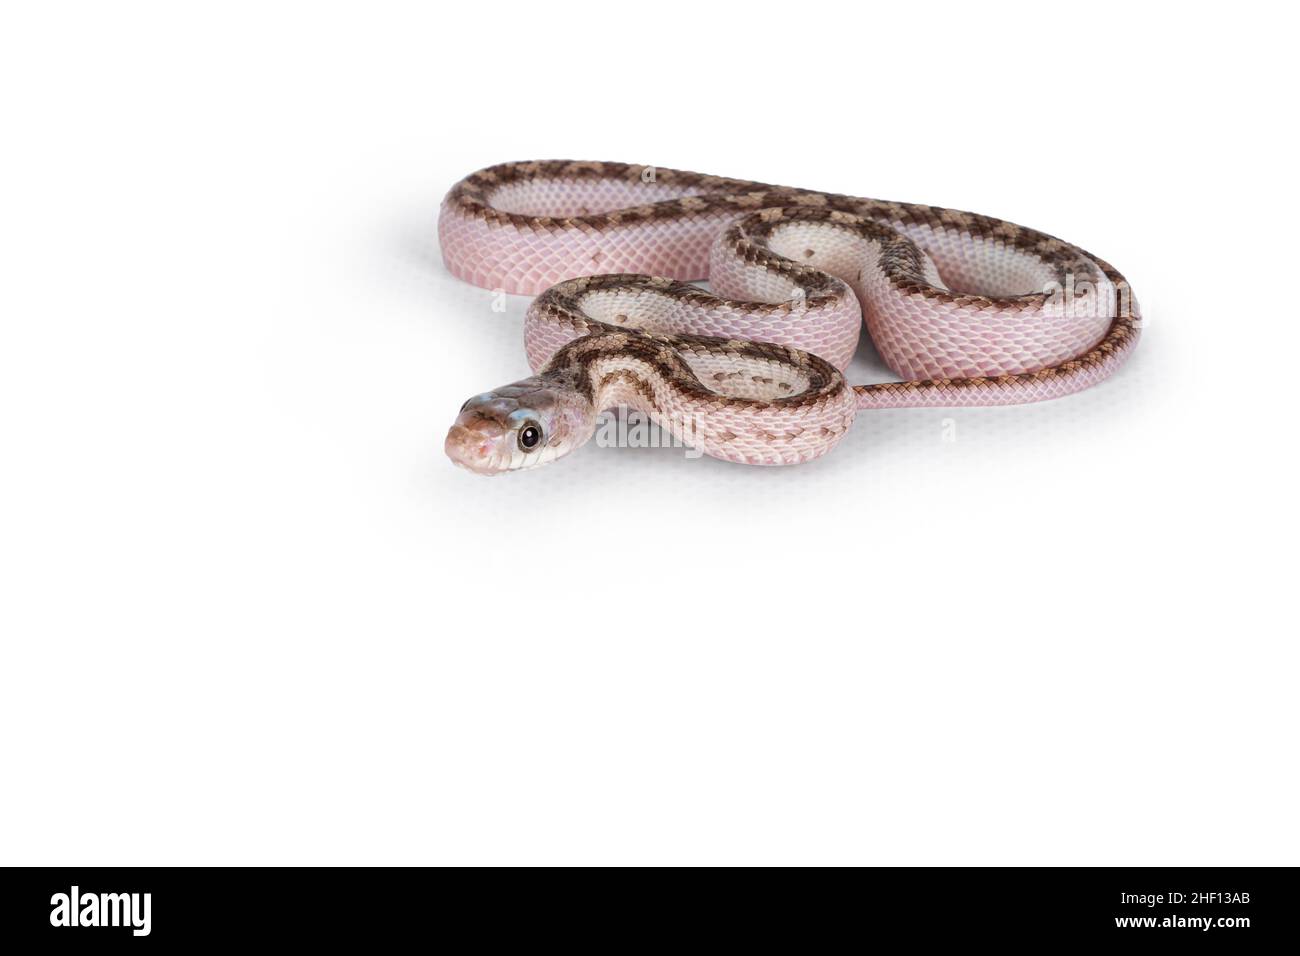 Baby white sided Texas rat snake or Elaphe obsoleta lindheimeri  crawling over white solid background. Stock Photo